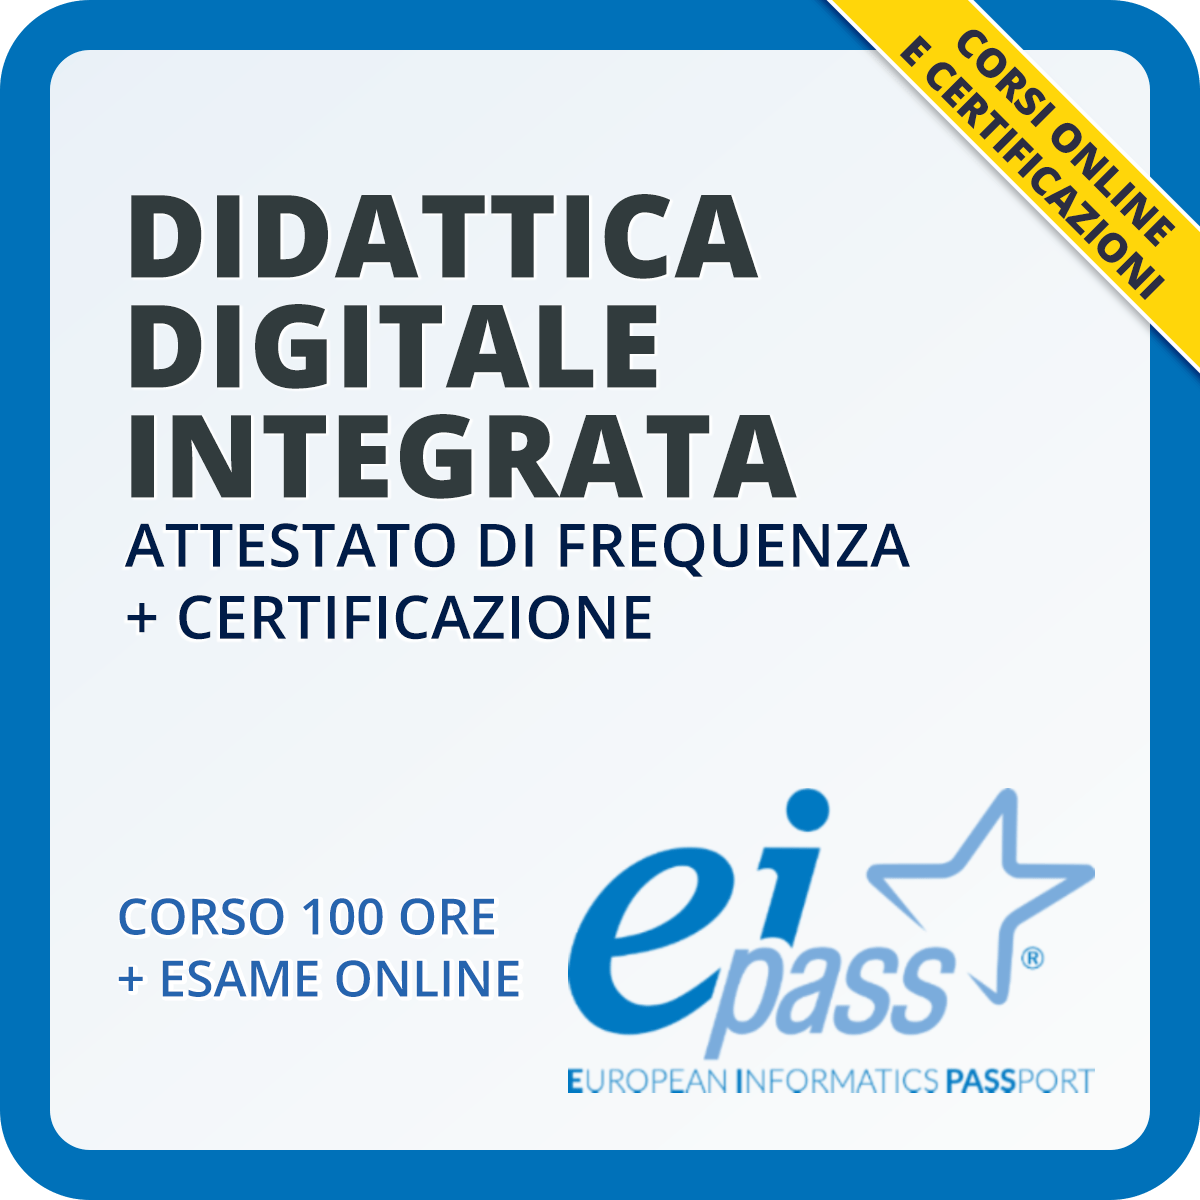 EIPASS didattica digitale integrata